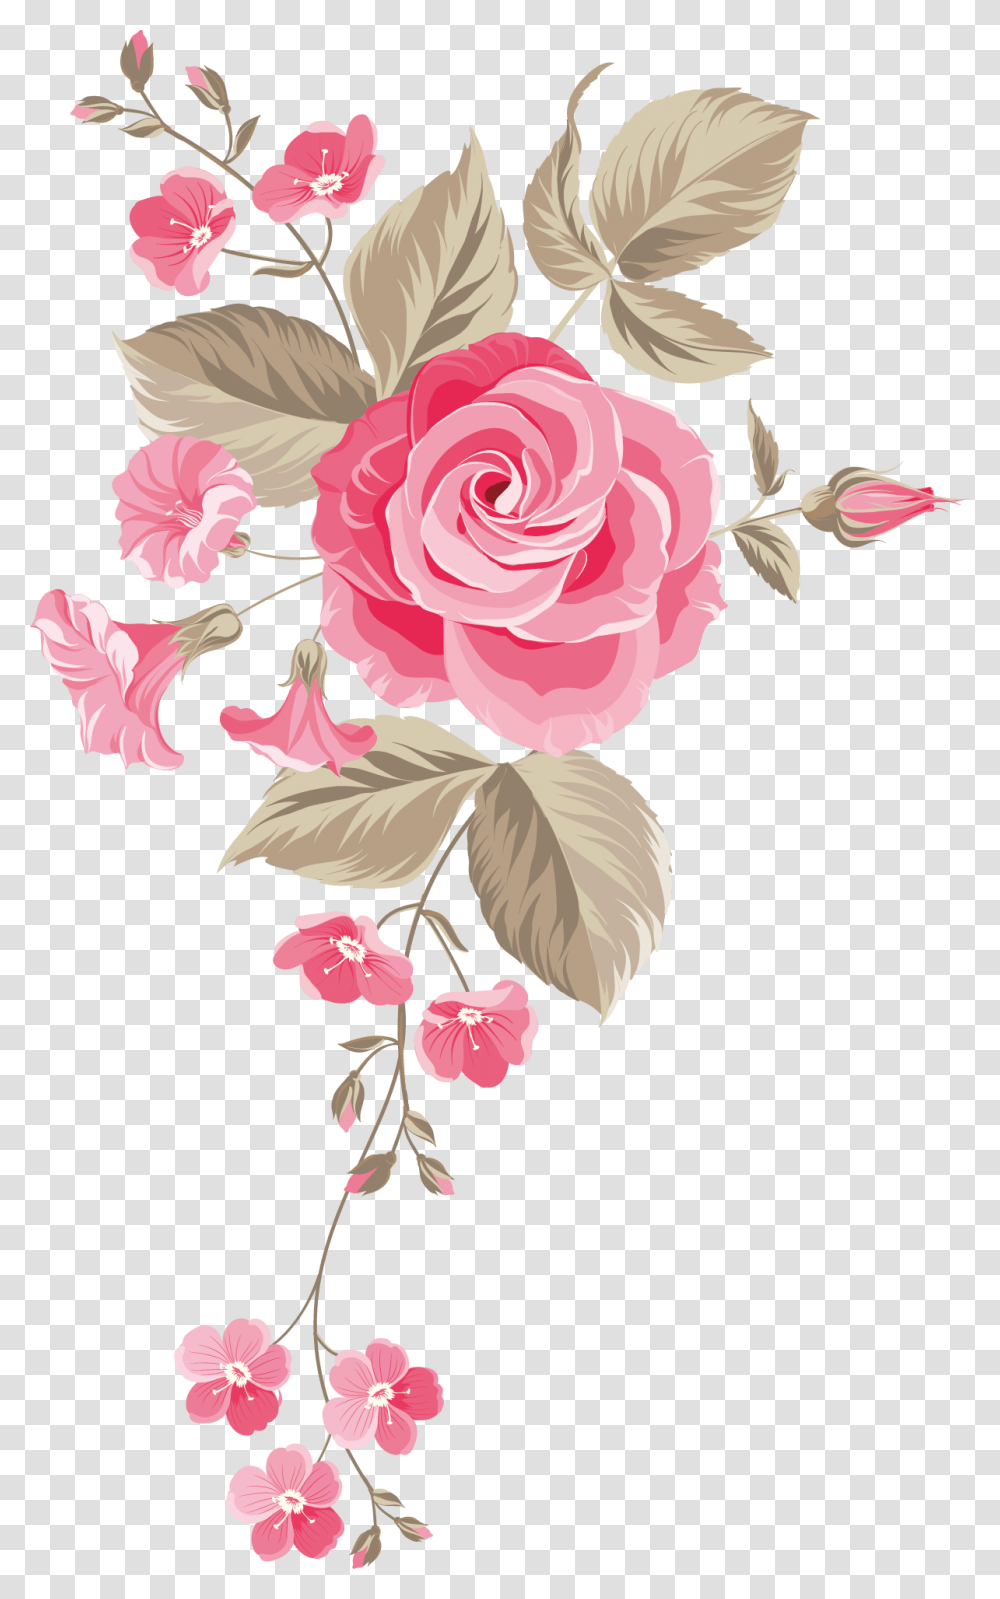 Rose Flower Image Free Download Searchpng Background Pink Roses, Plant, Blossom Transparent Png